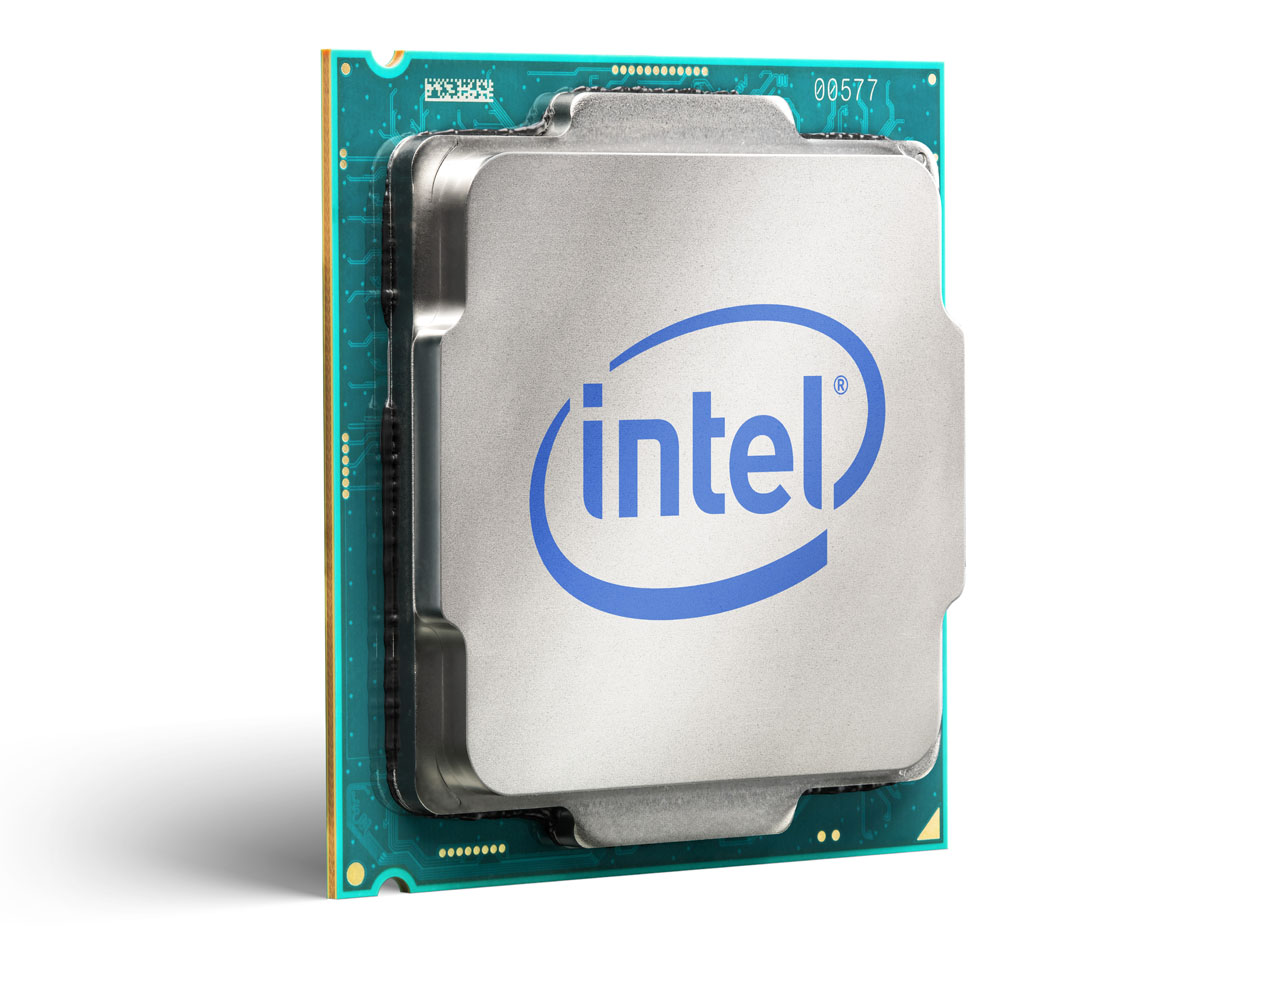 Intel Core i7-7700K: Power Consumption And Temperatures